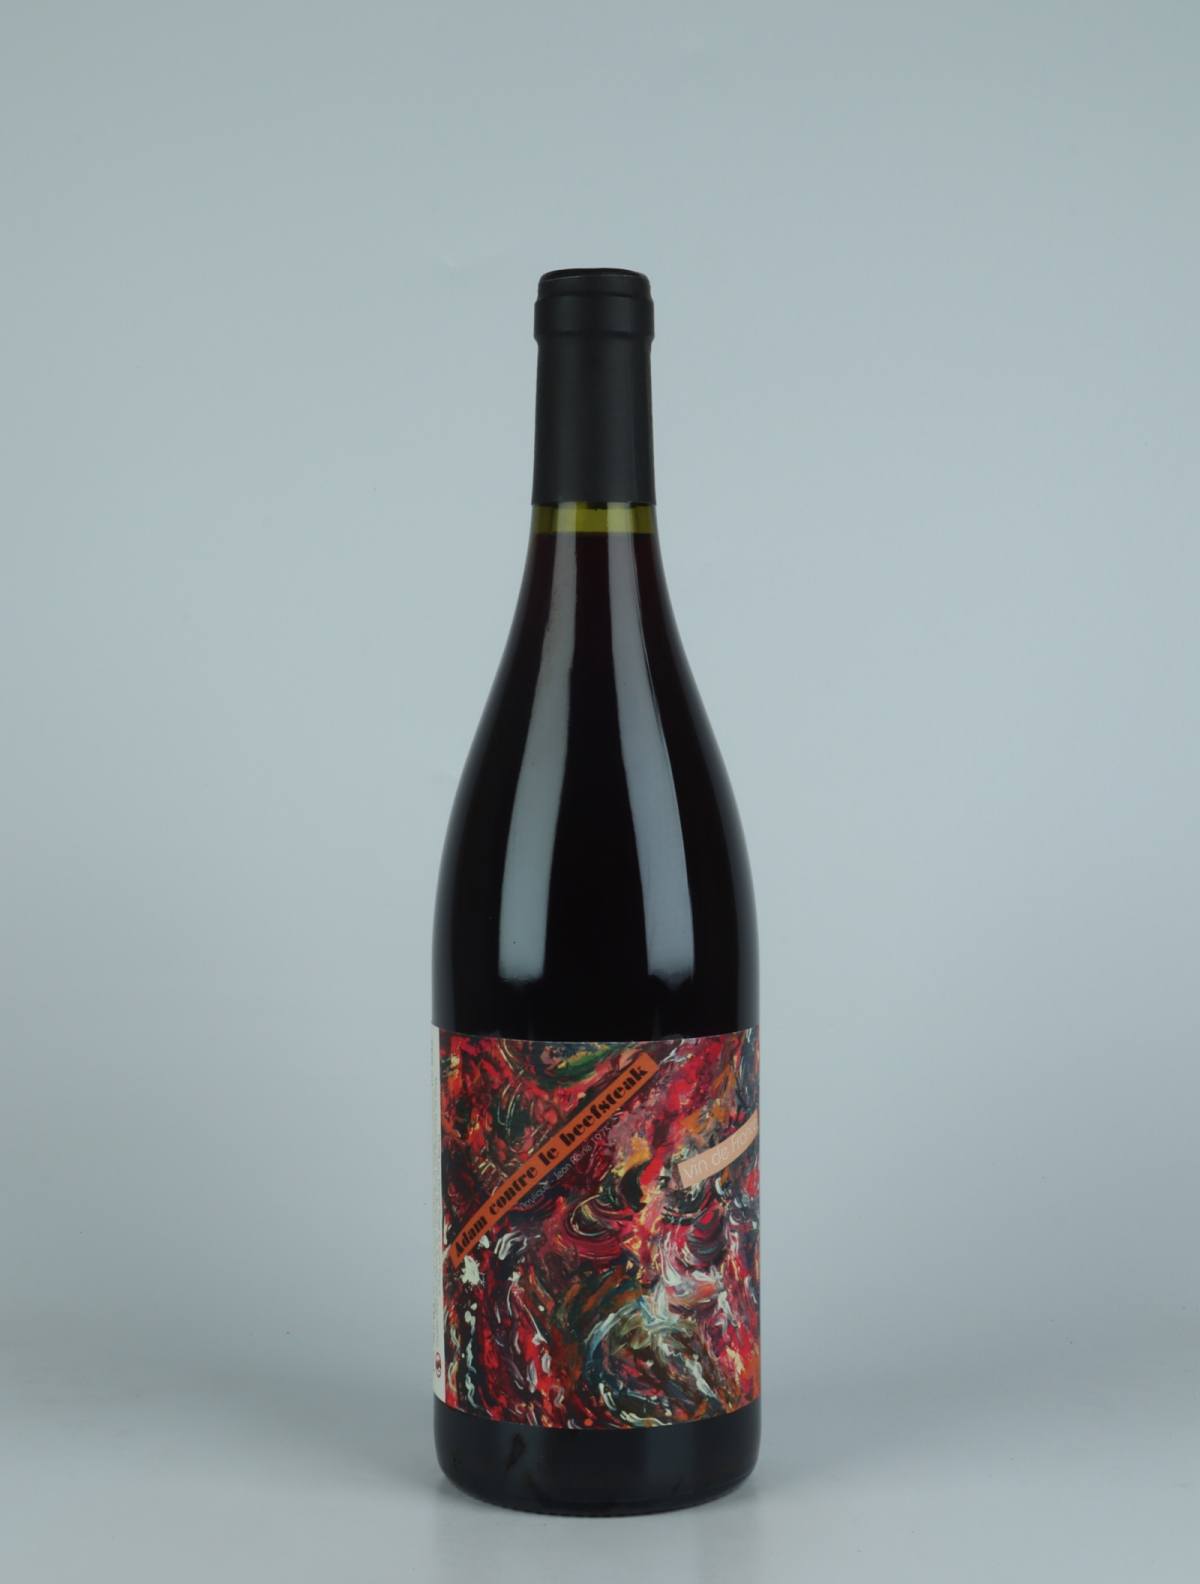 A bottle 2020 Adam Contre le Beefsteack Red wine from Daniel Sage, Haute-Loire in France